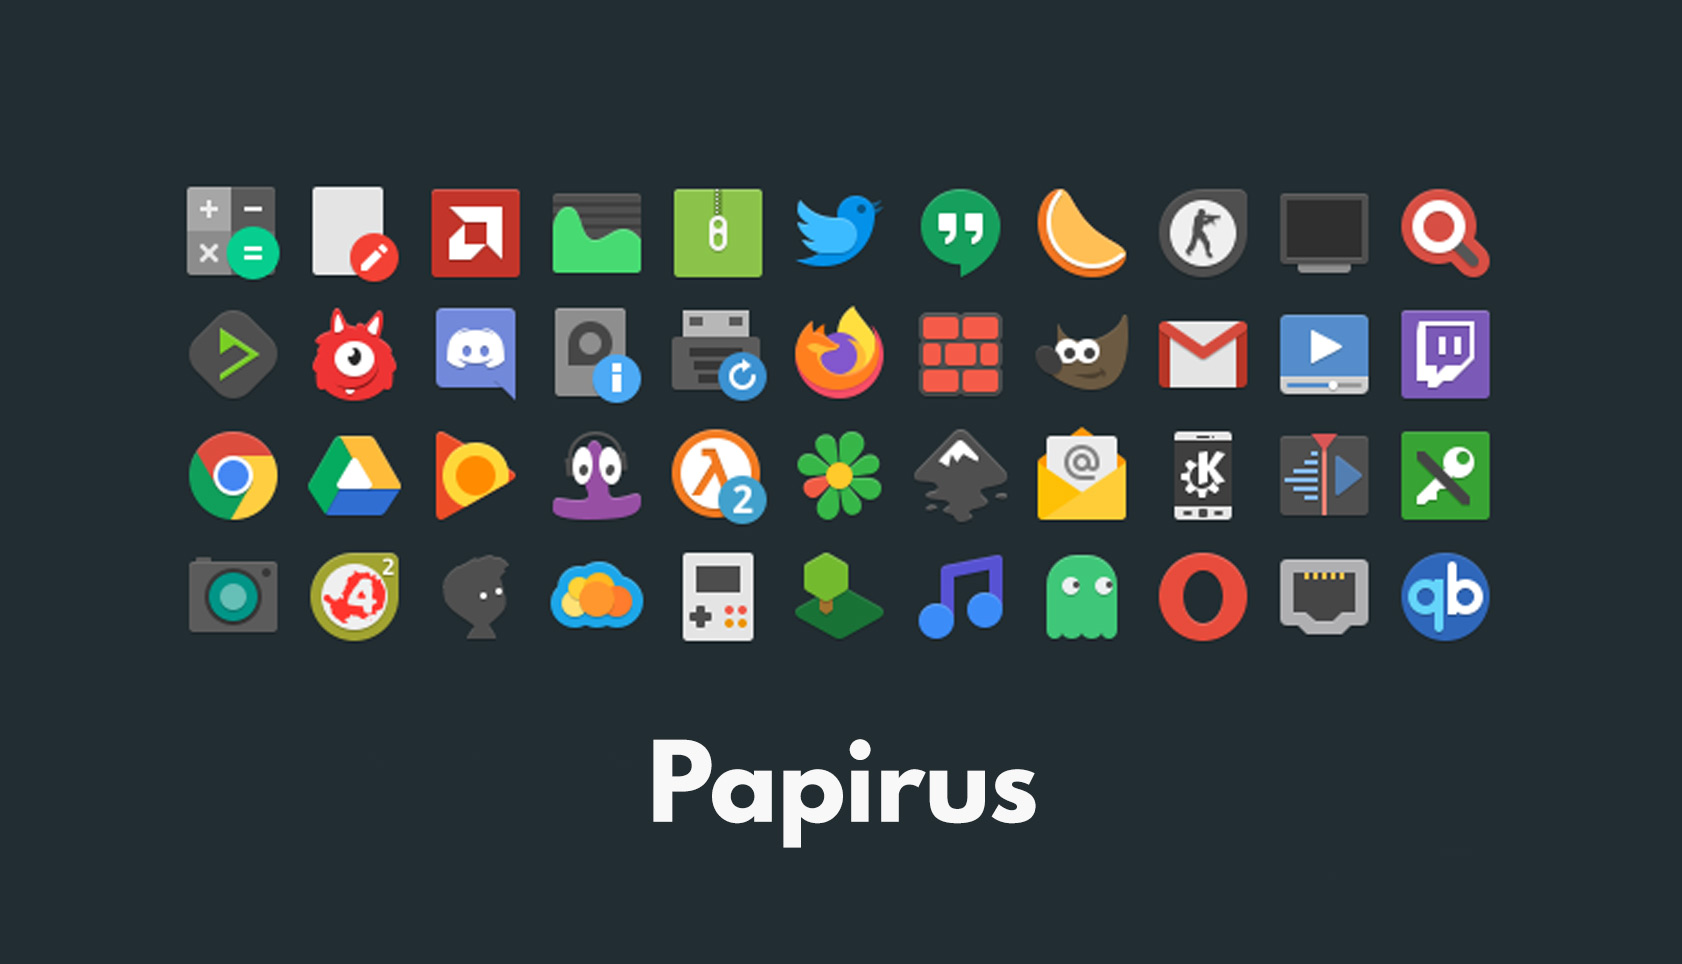 Dragon ball online global Icon, Papirus Apps Iconpack